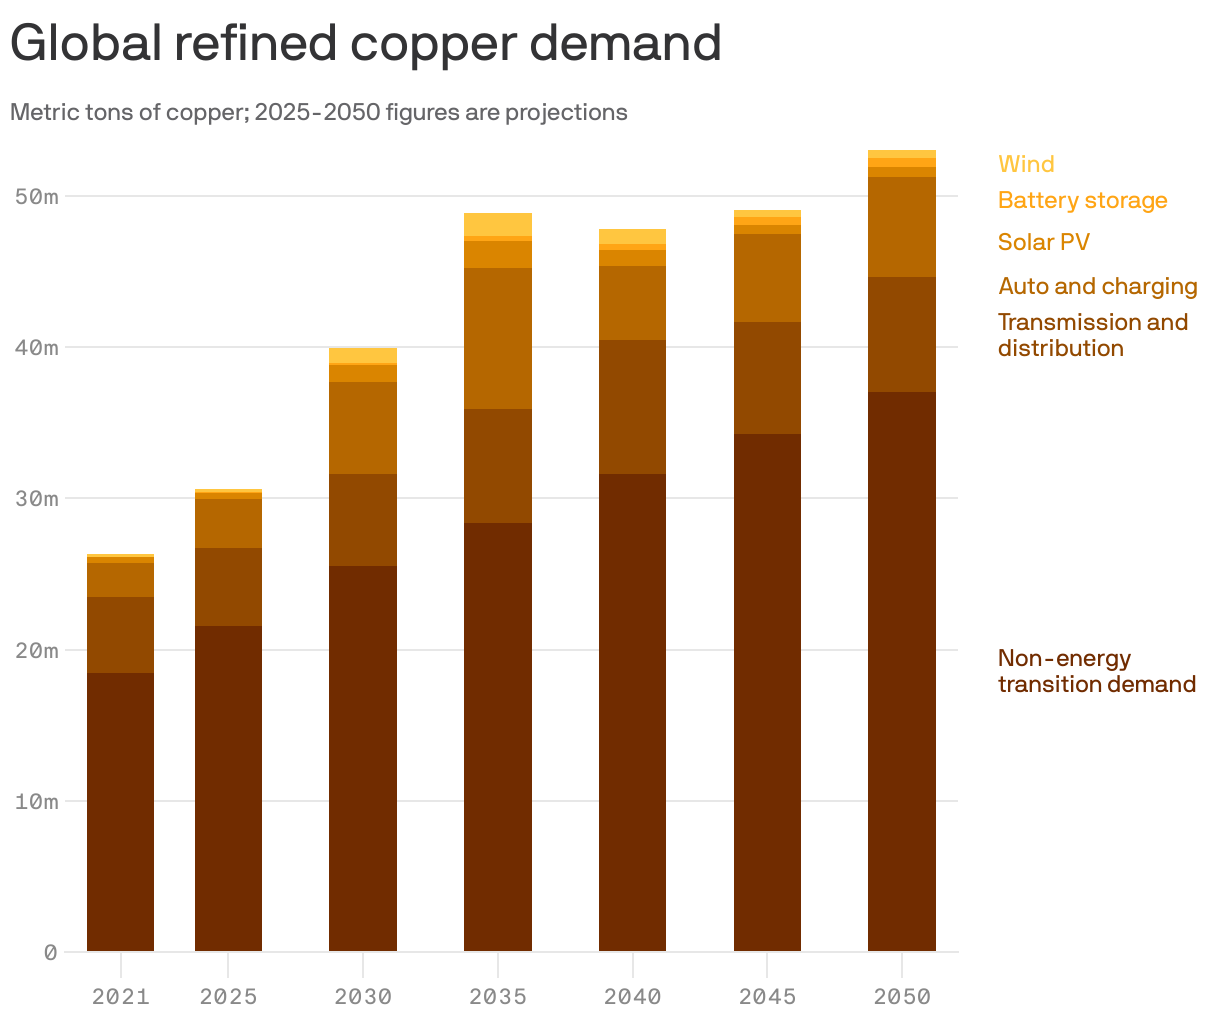 Global refined copper demand